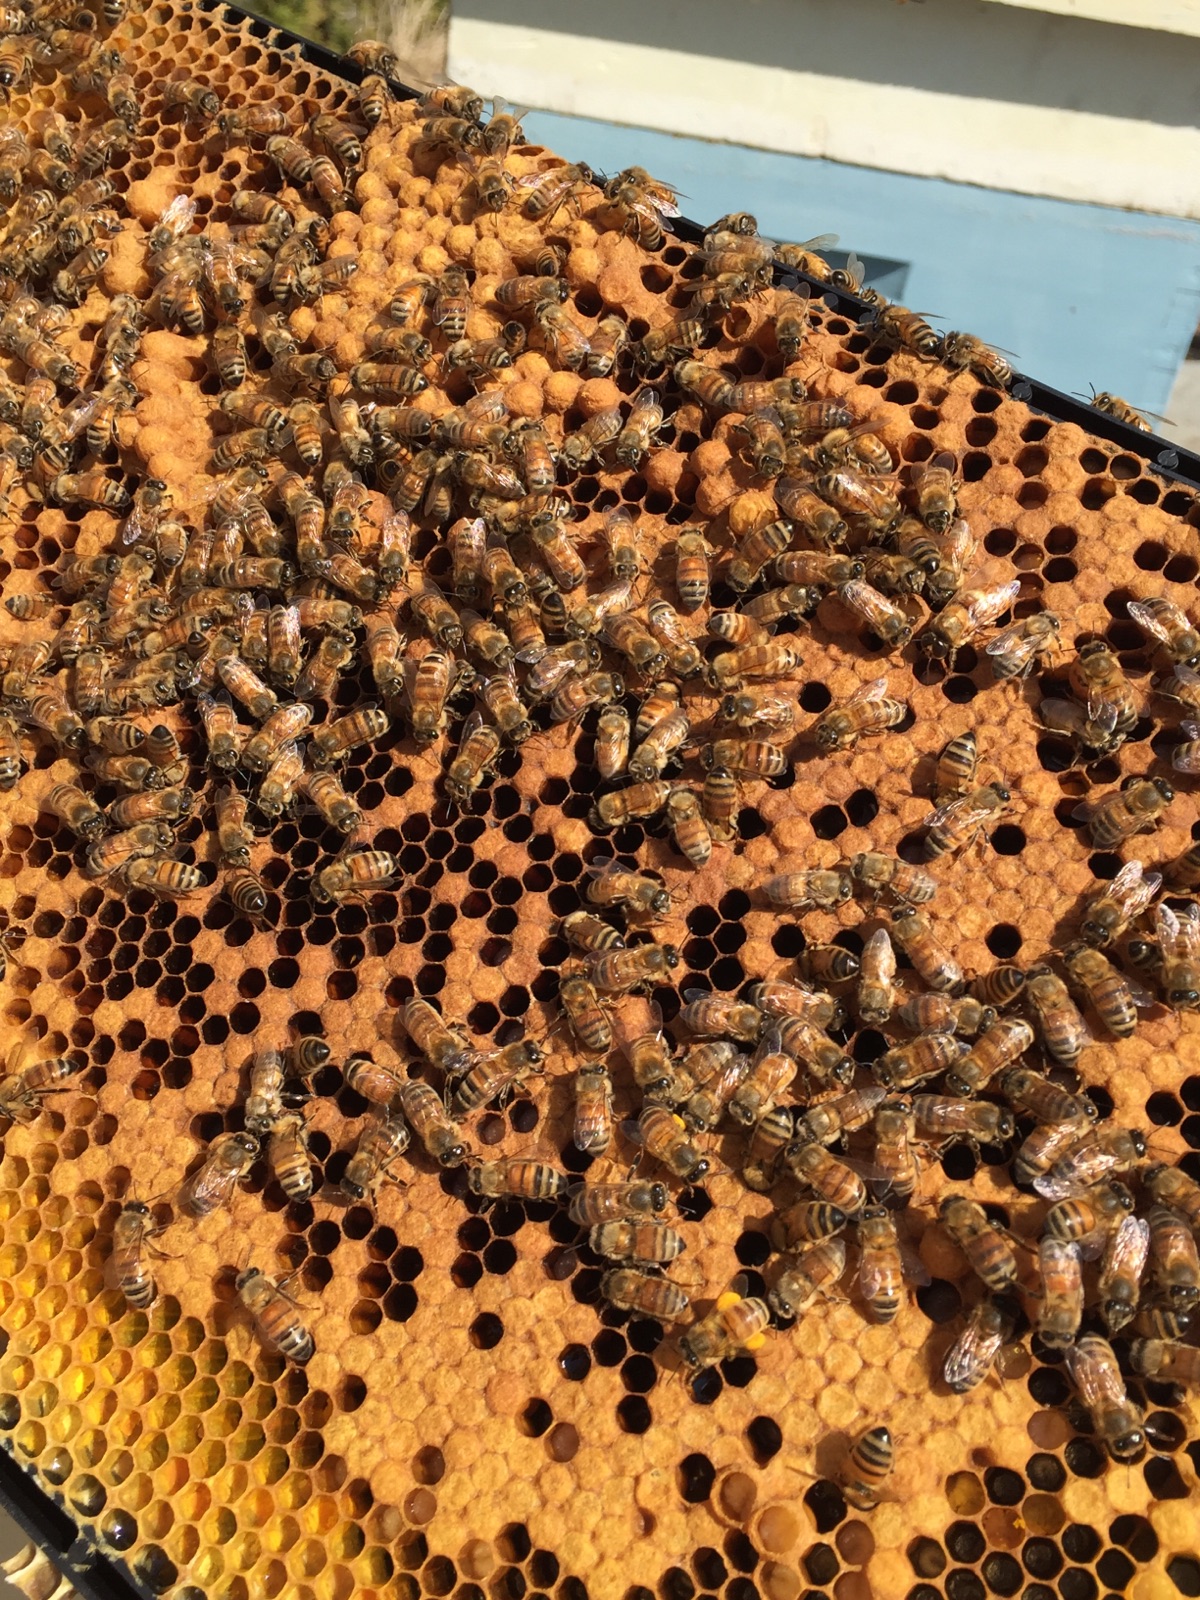 Beehive in the Peters' Yard